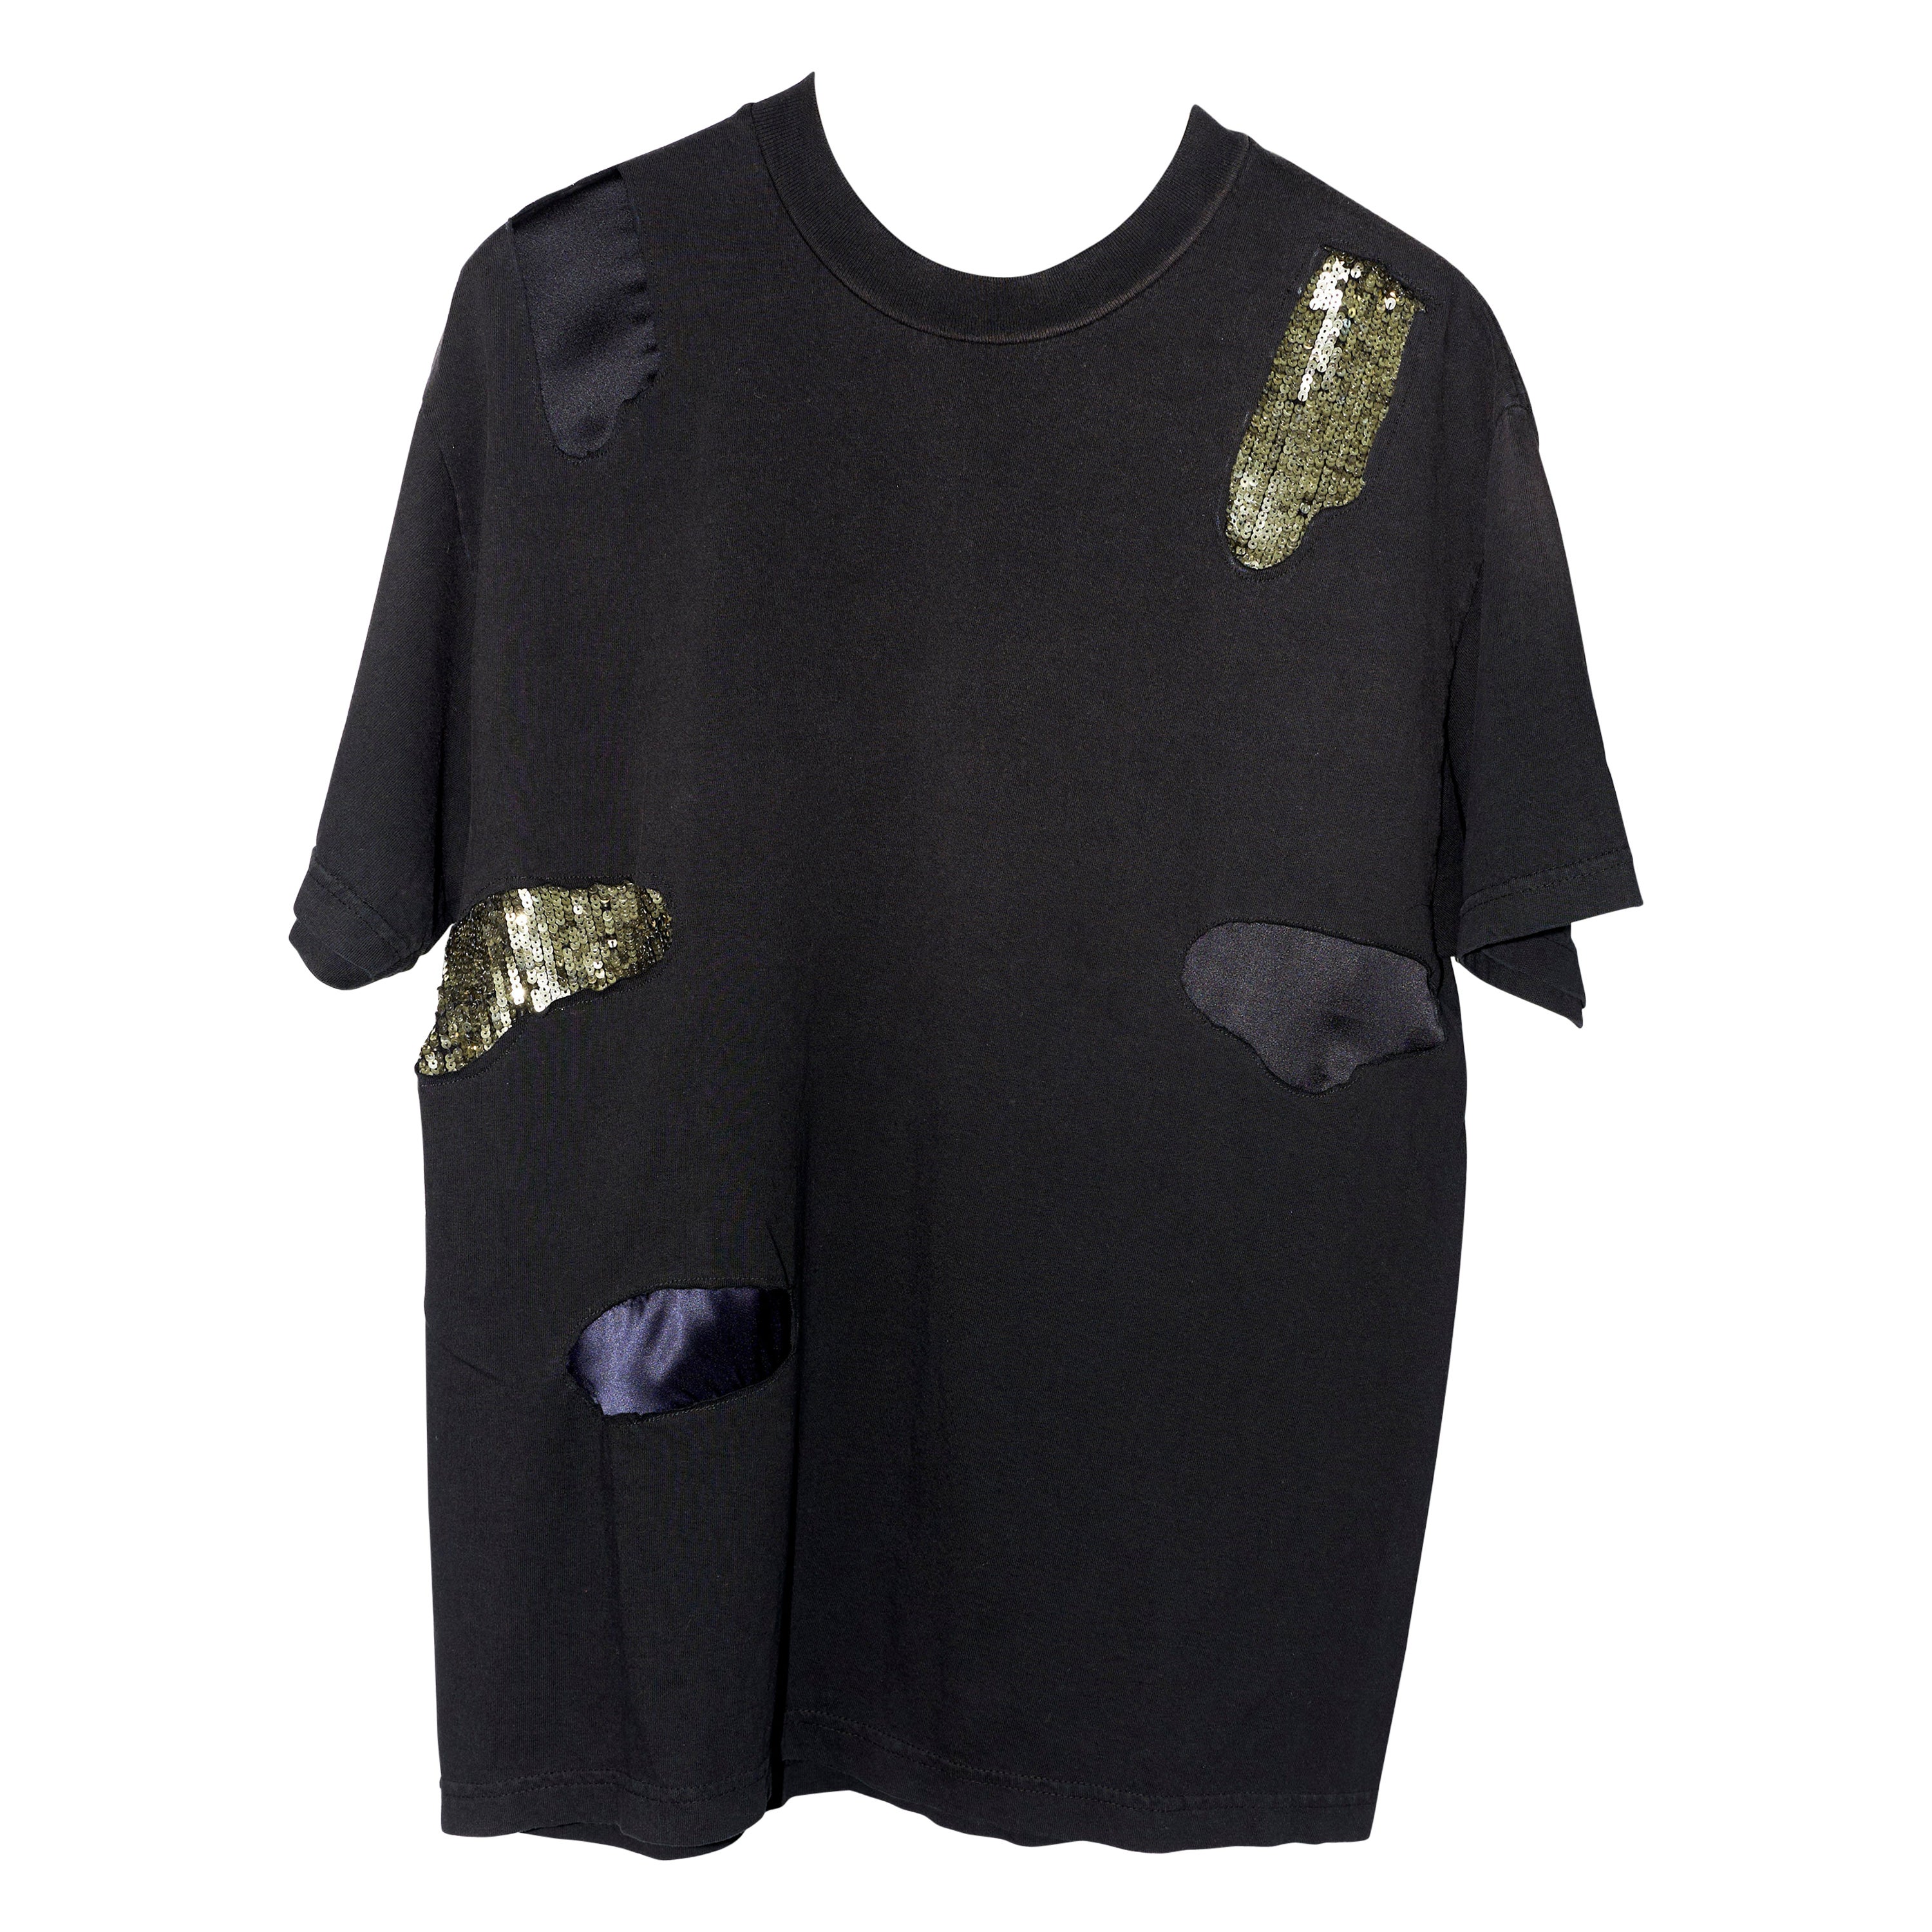 J Dauphin Black T-Shirt Embellished  Patch Work Sequin Silk Body Cotton 